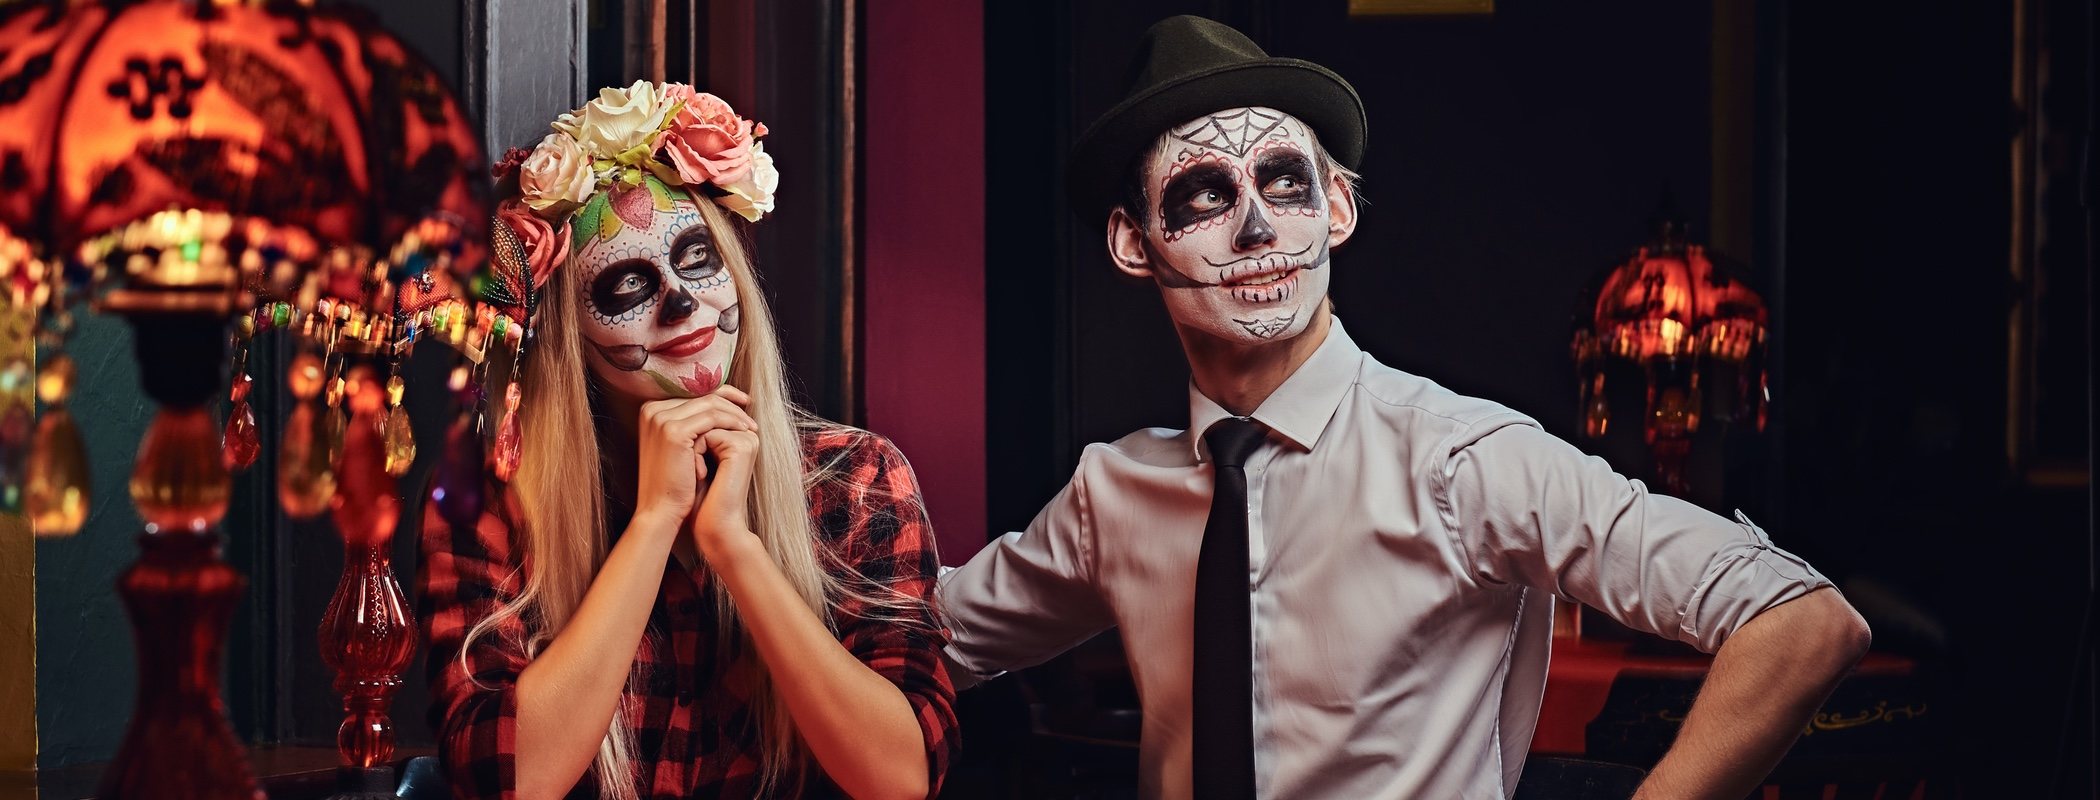 20 frases para enamorar a tu pareja en Halloween - Bekia Pareja